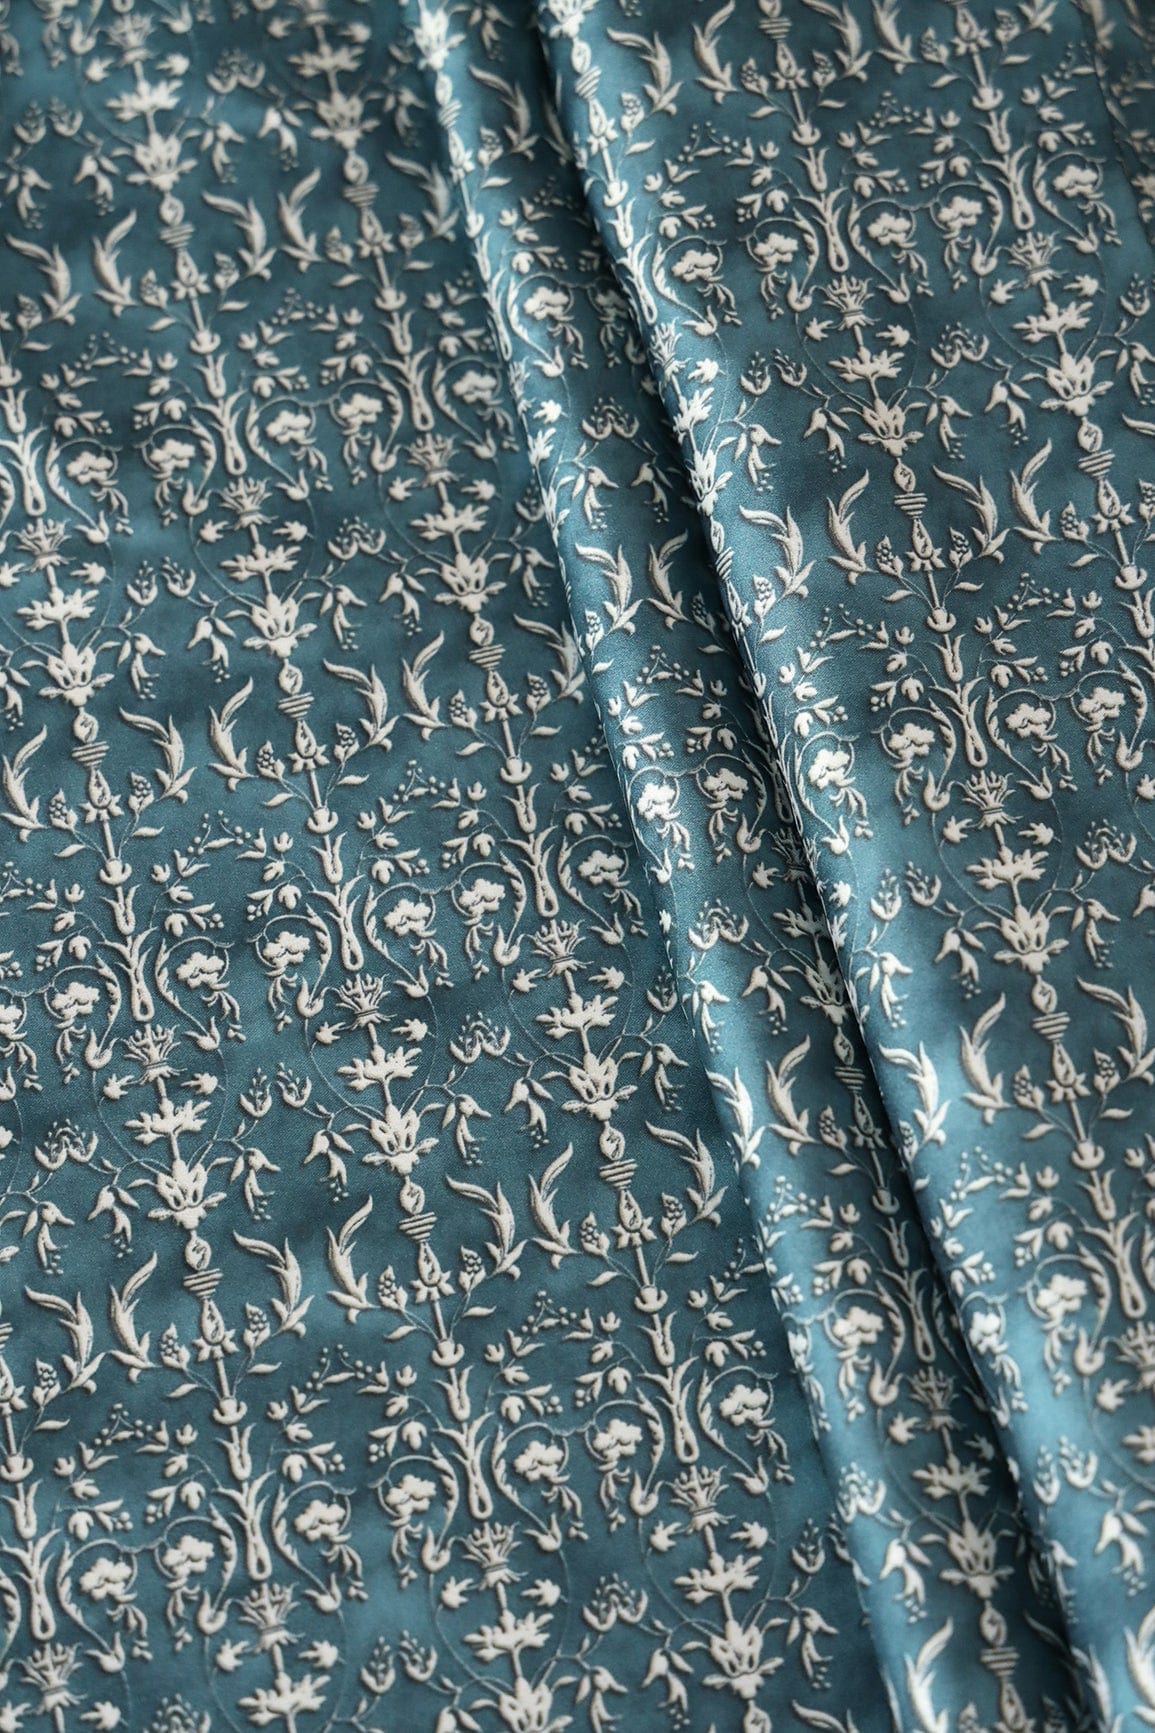 doeraa Prints Blue Jay Ethnic Pattern Digital Print On Satin Fabric